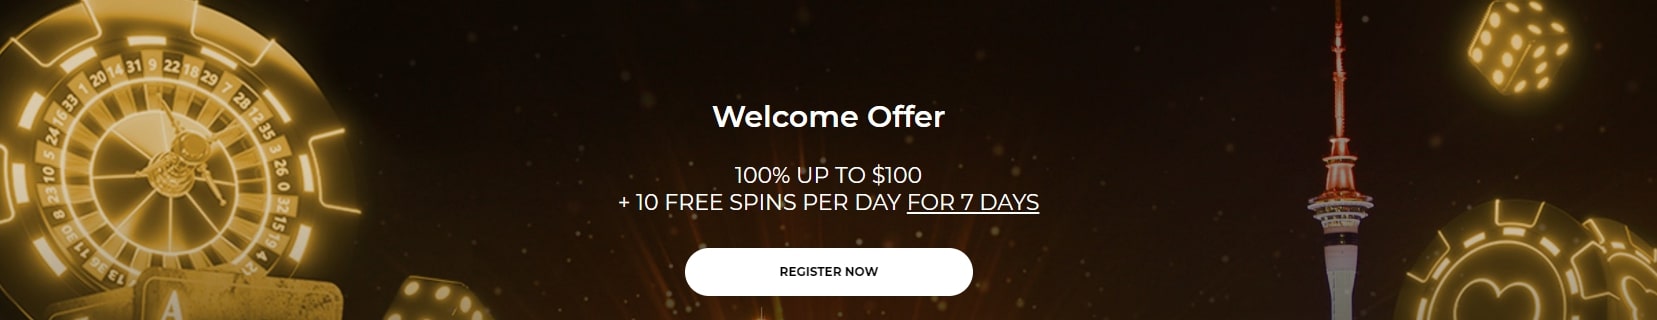 Online Casino NZD Skycity